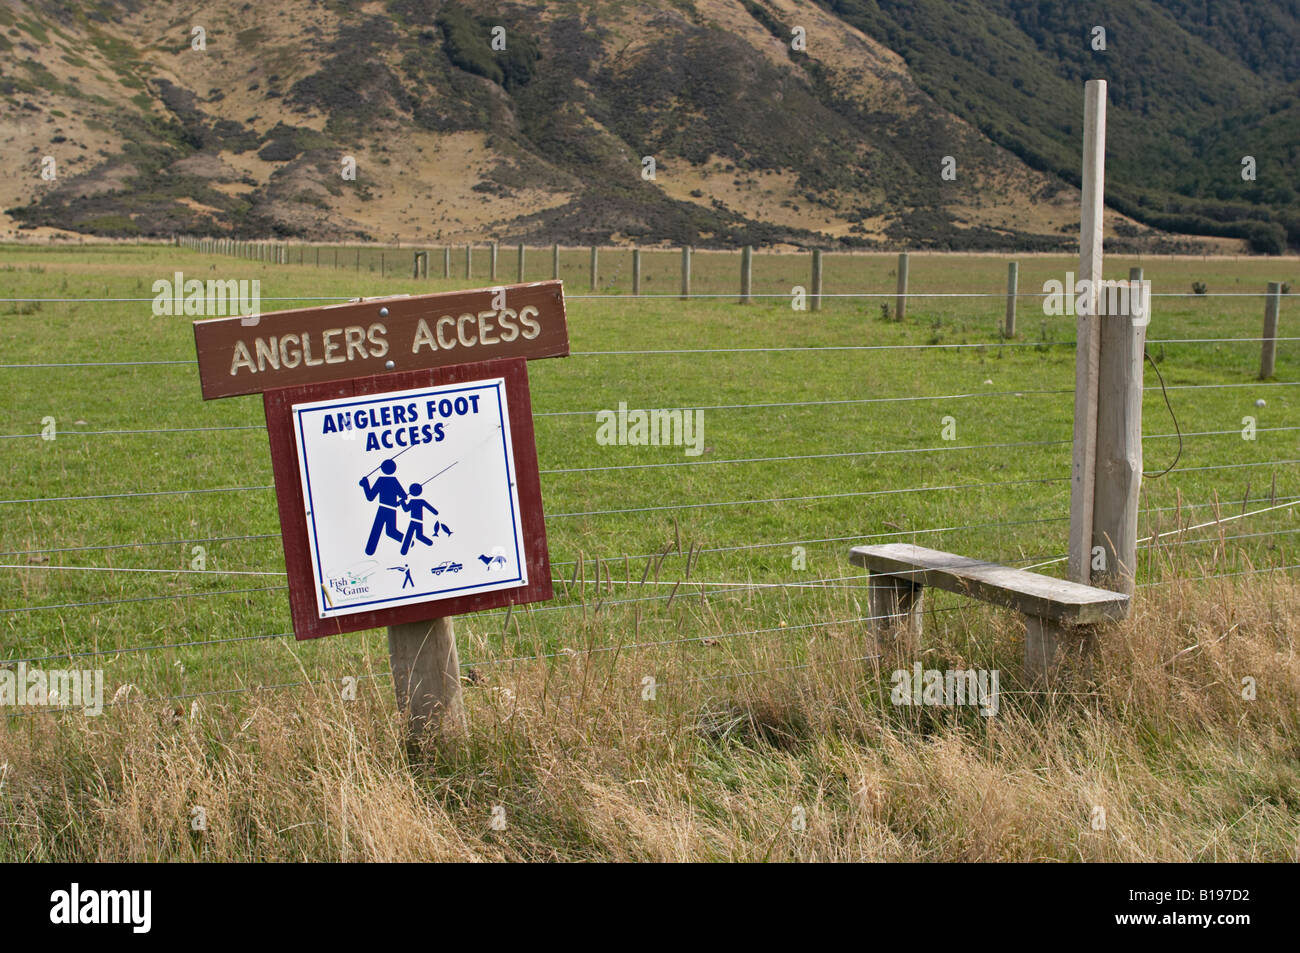 Neuseeland Südinsel Mavora Seen Park Angler Zugang Hinweisschilder entlang Zaun Erlaubnis für Fischer aus Holz Stil Stockfoto